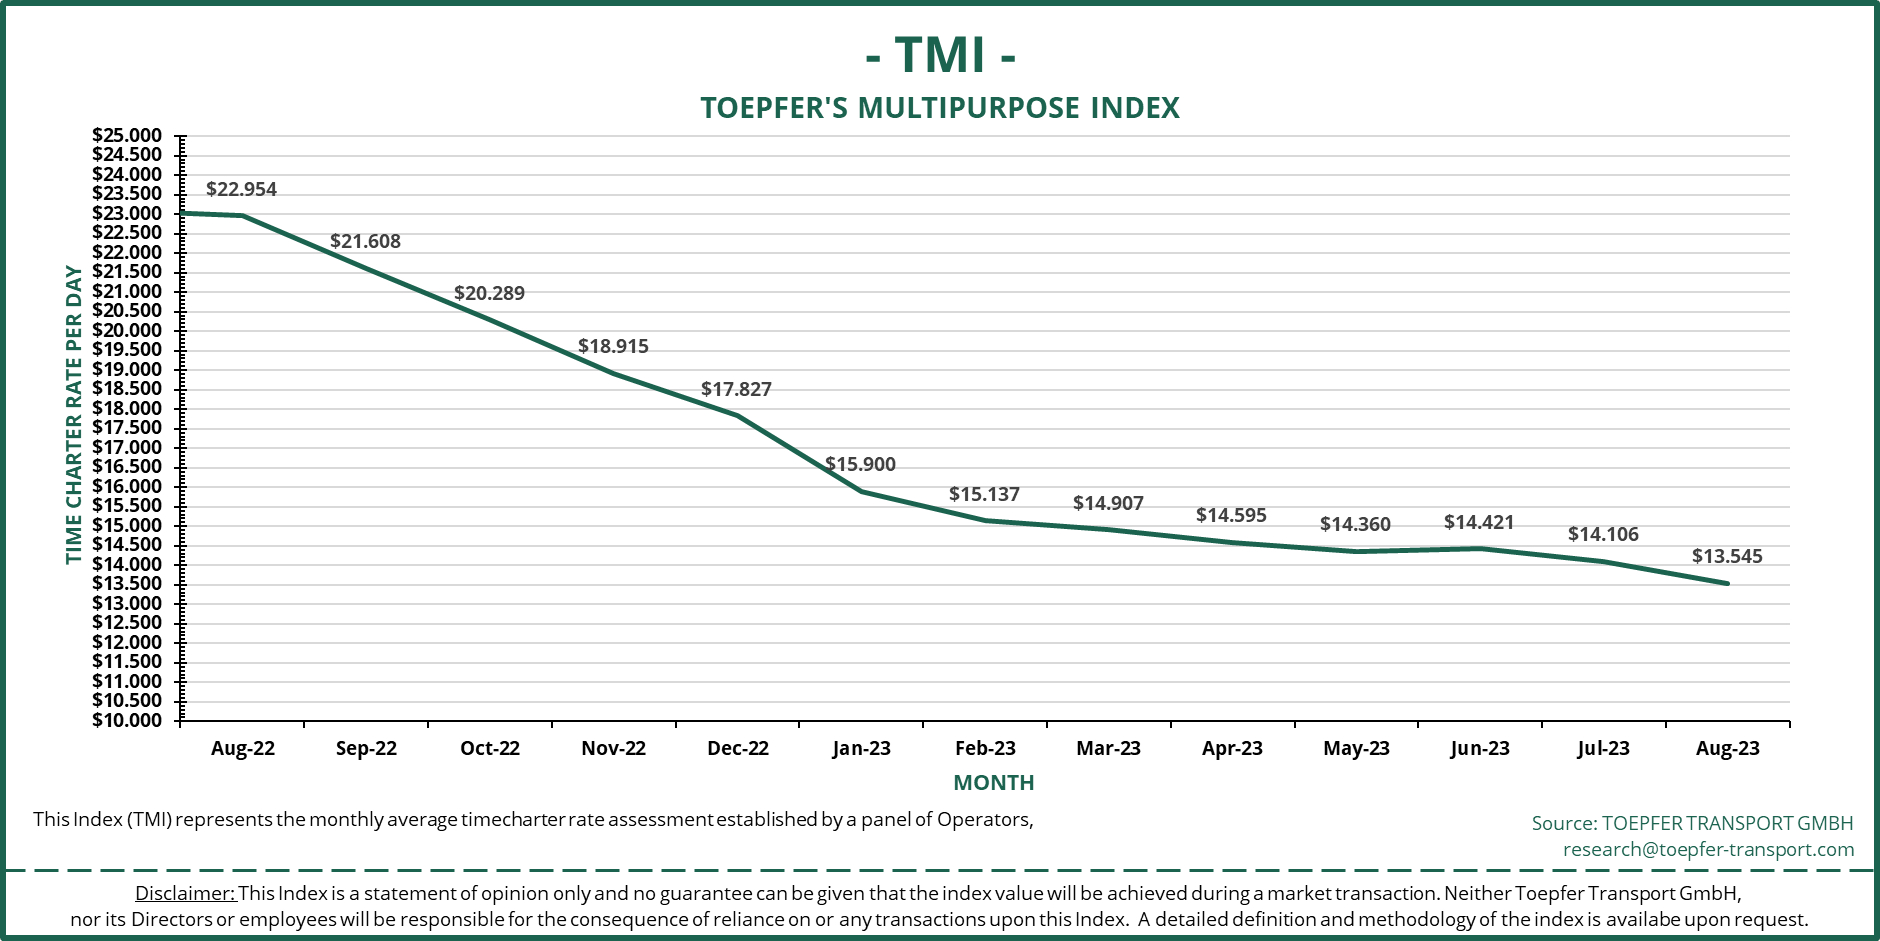 MPP summer lull continues, TMI still above 5-year average